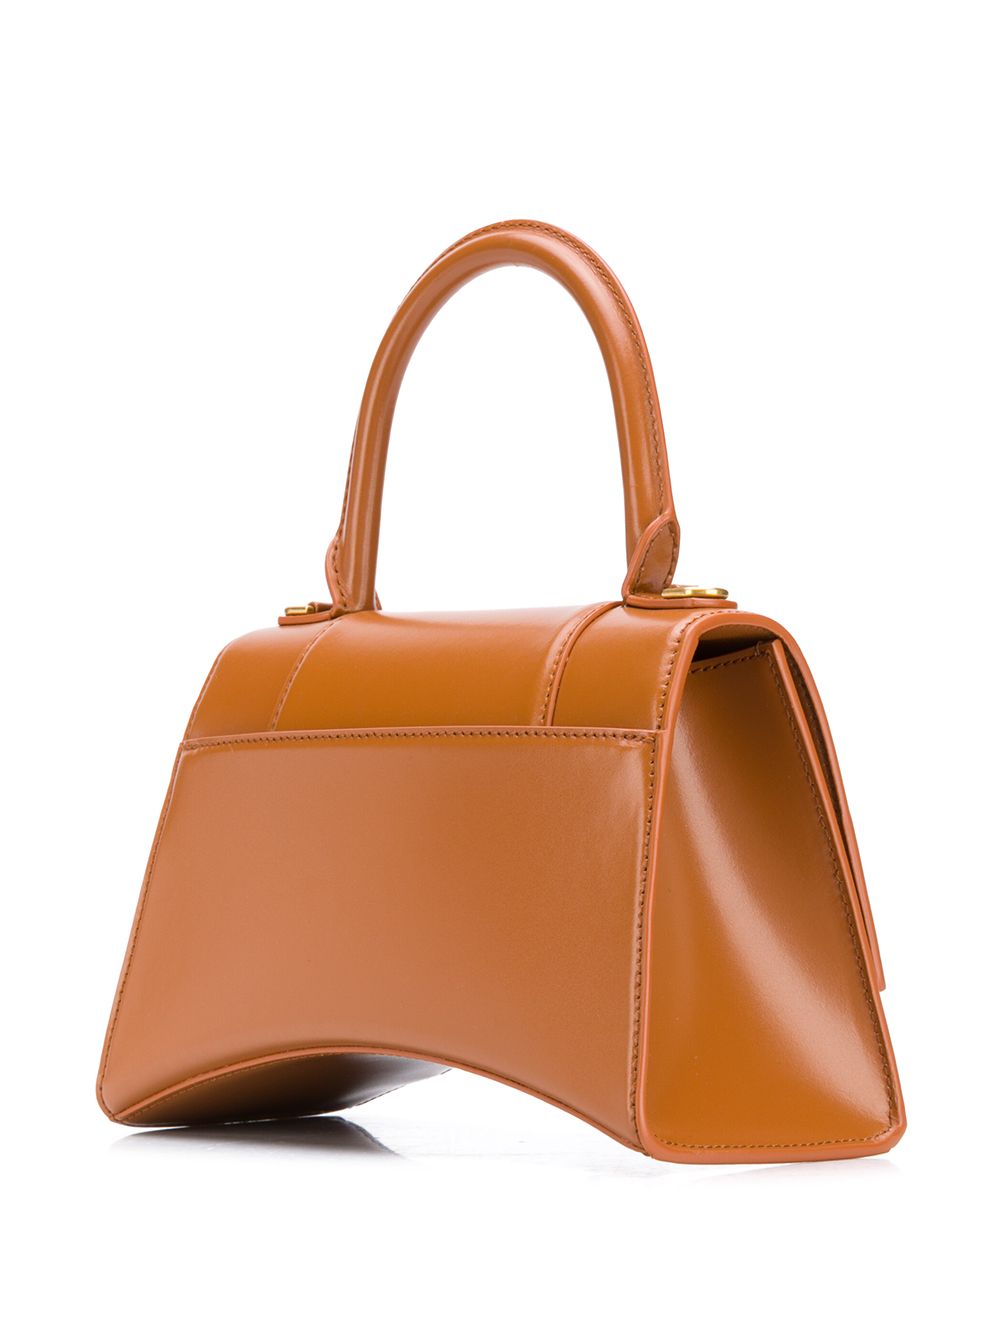 Balenciaga Vintage - Everyday Tote Bag - Black - Leather Handbag - Luxury  High Quality - Avvenice